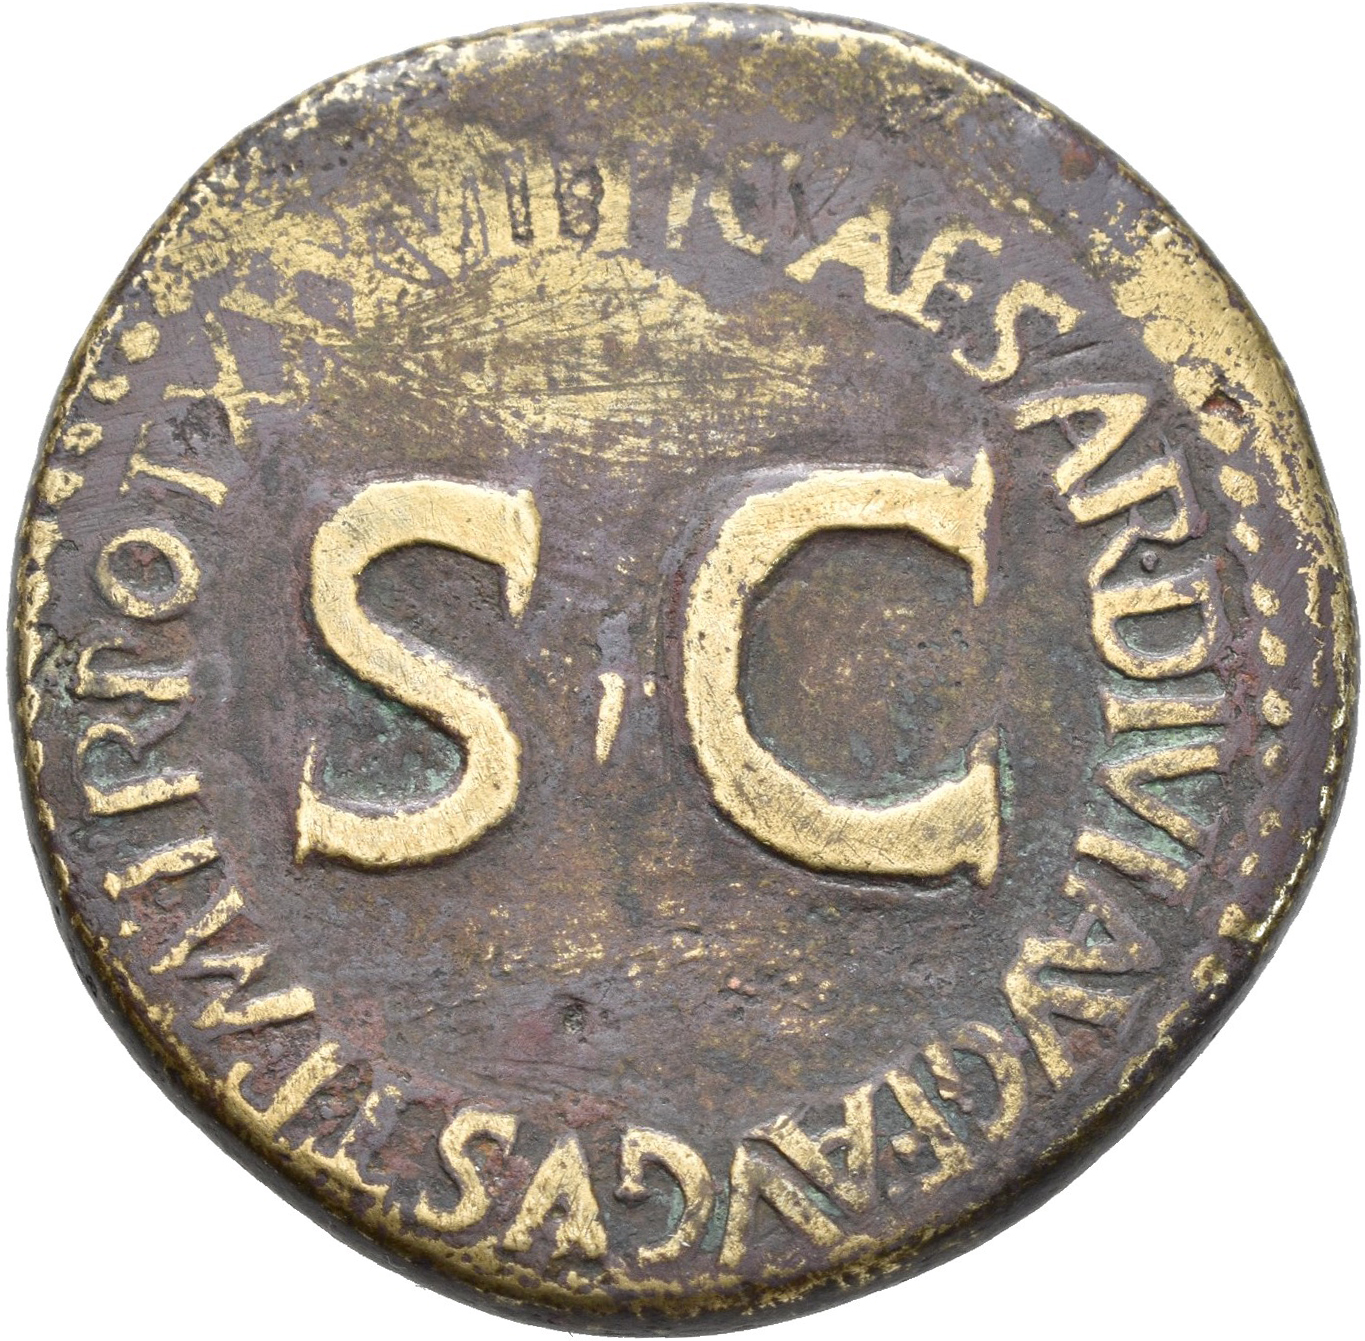 Lot 13005 - Augustus (27 v.Chr. - 14 n.Chr.) | Antike - Rom - Kaiserzeit  -  Auktionshaus Christoph Gärtner GmbH & Co. KG 53rd AUCTION - Day 6 Coins/Banknotes